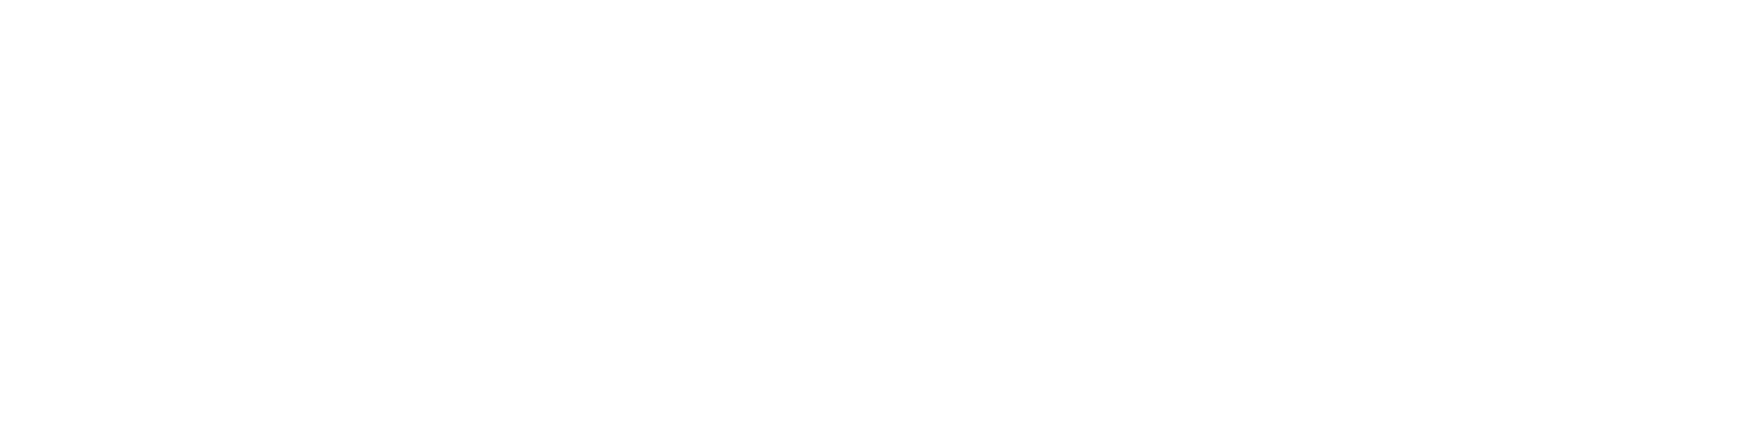 XPEL logo large for dark backgrounds (transparent PNG)